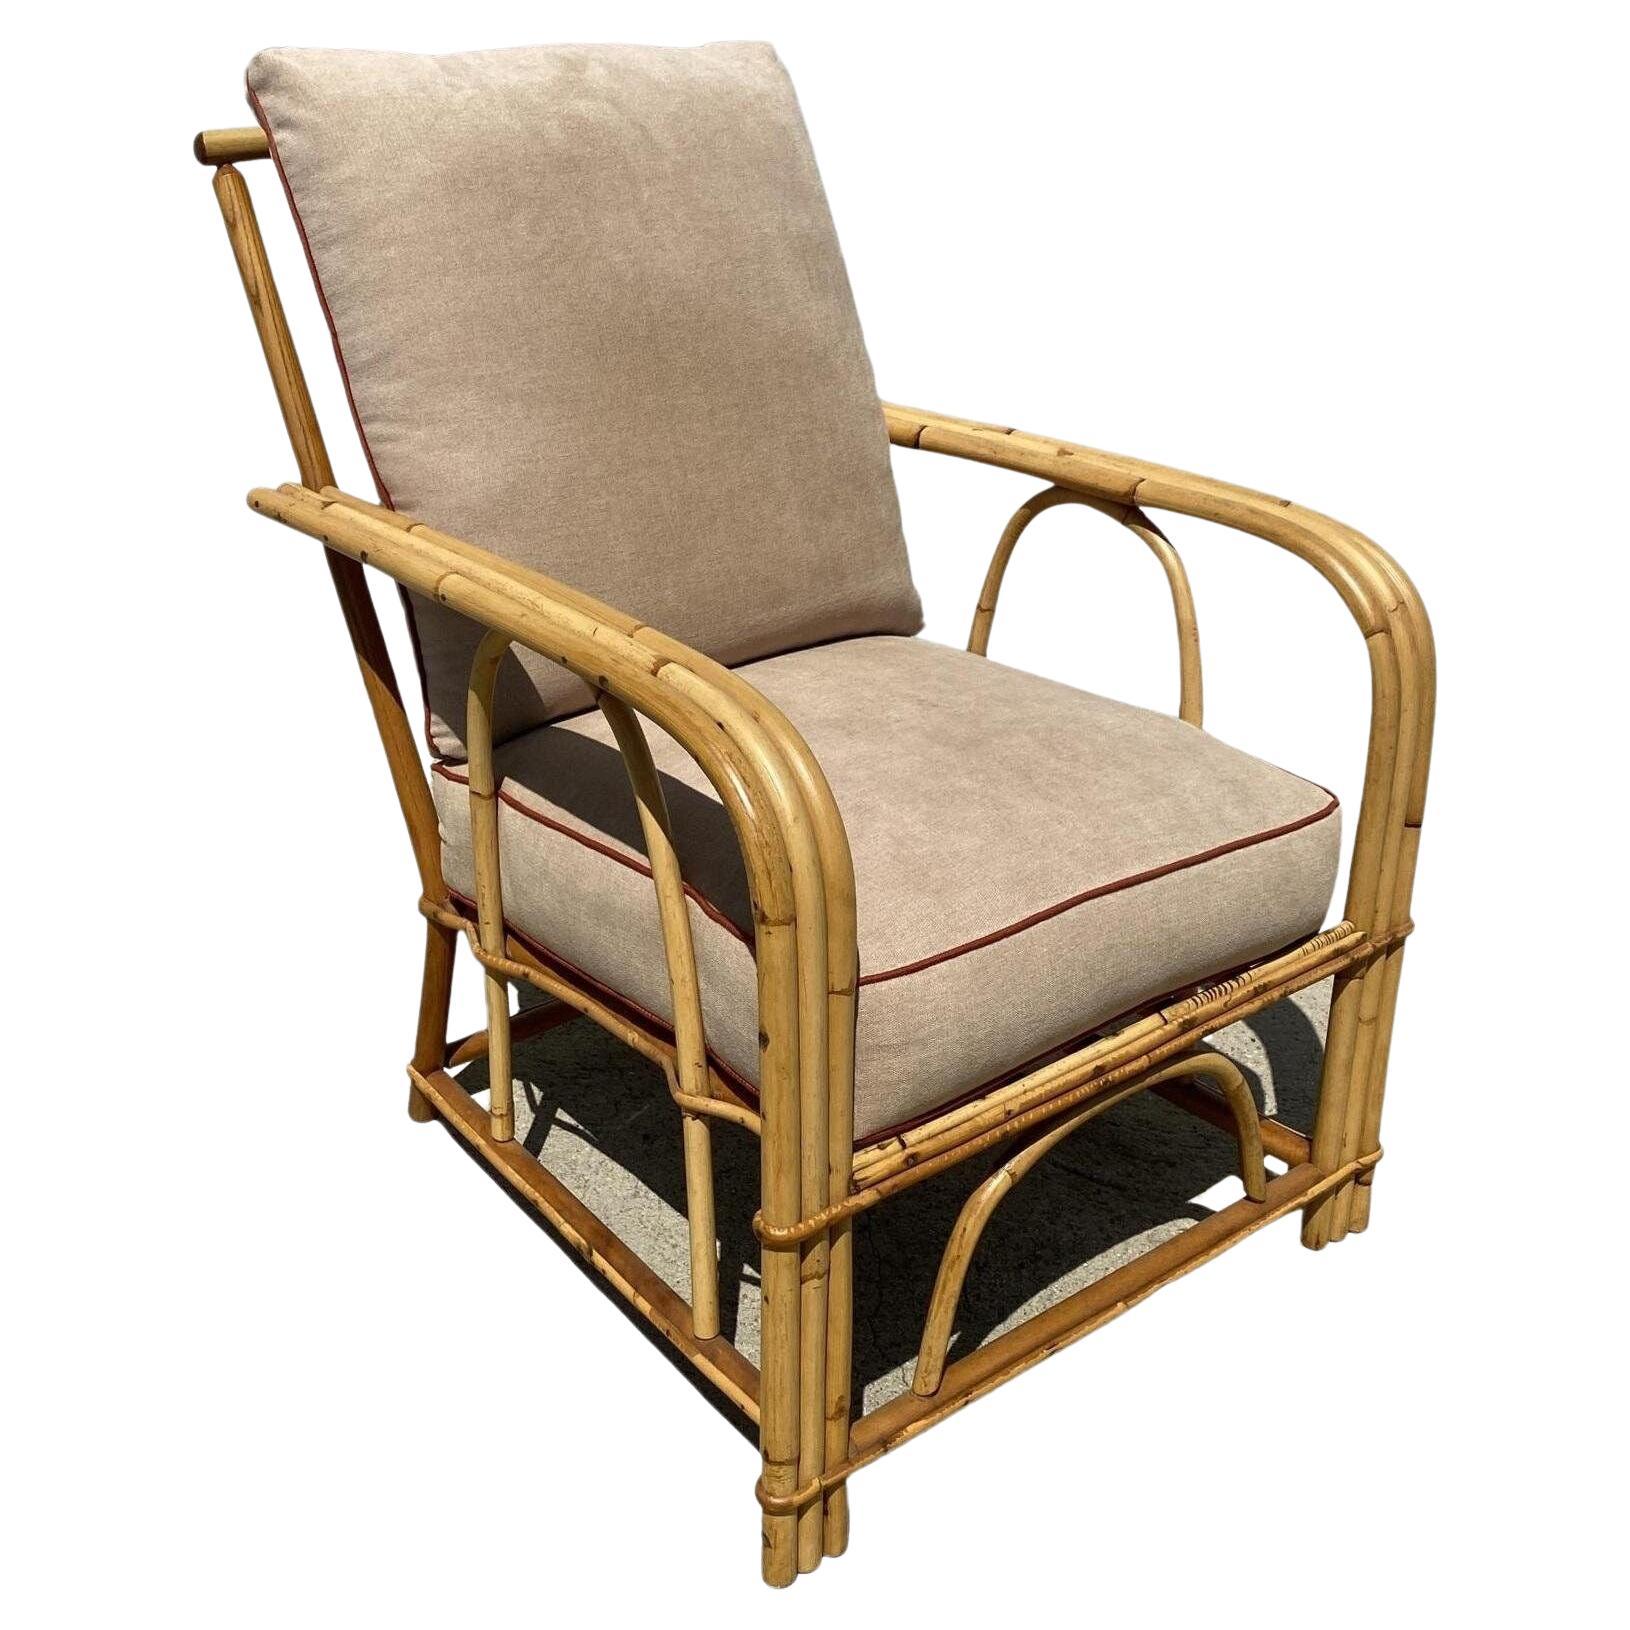 Restored "1949er" Rattan 3-Strand Lounge Chair by Heywood Wakefield